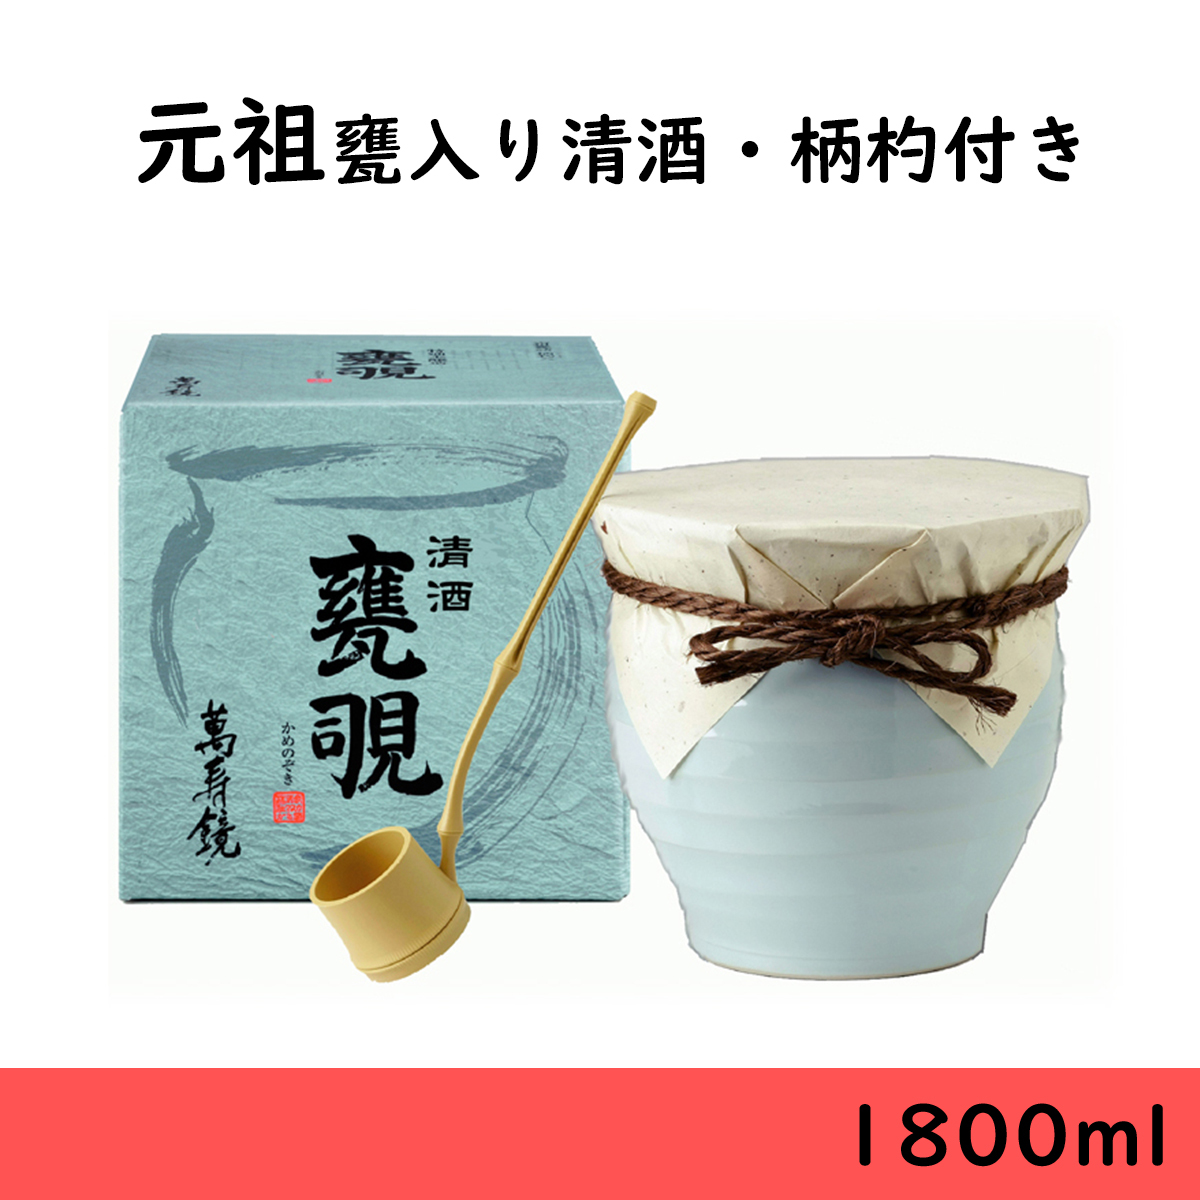  japan sake present .. mirror jar .1800ml limitation 